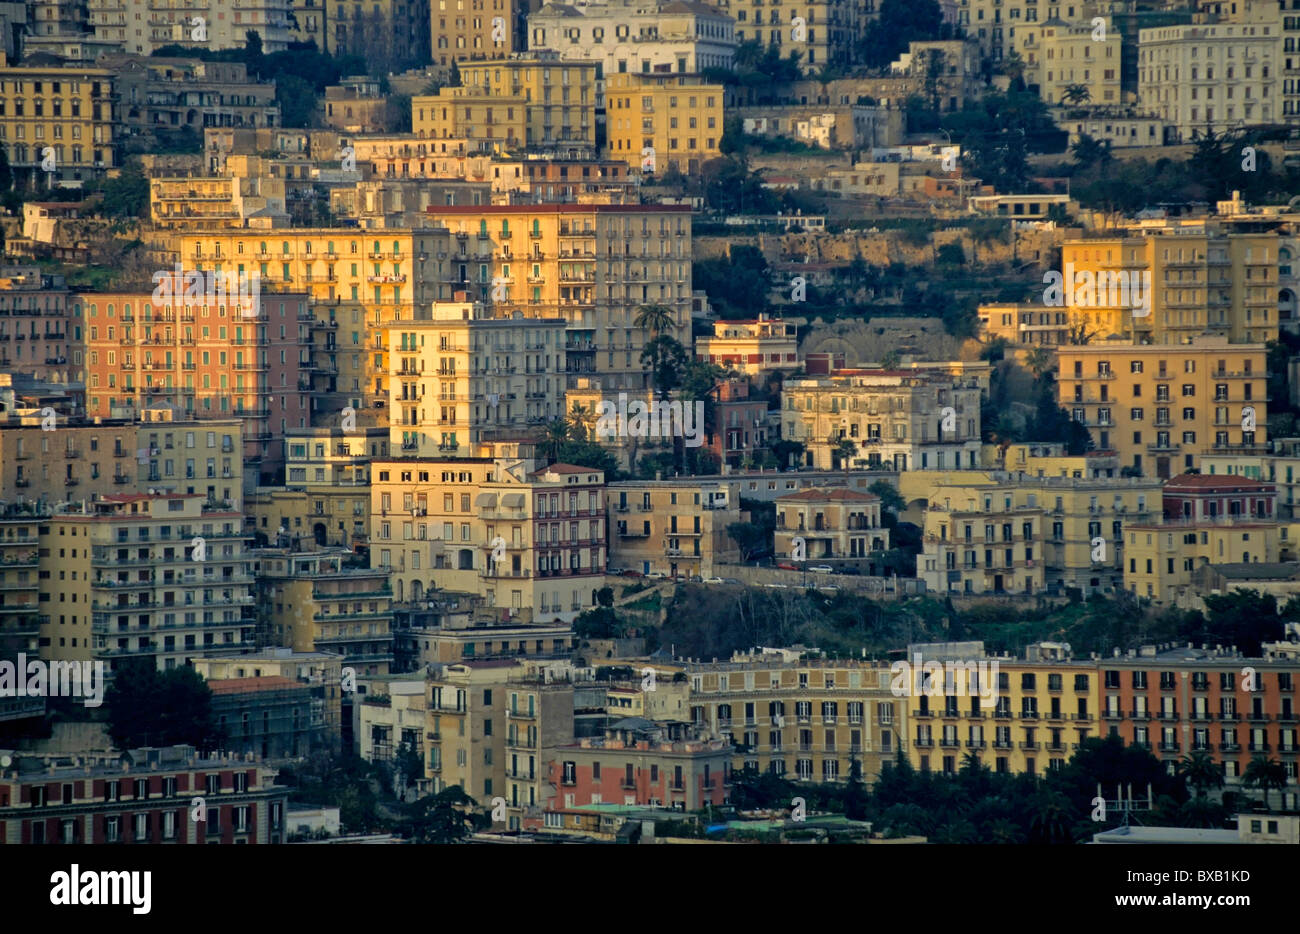 Posillipo District, Naples, Italy - at dusk. Stock Photo